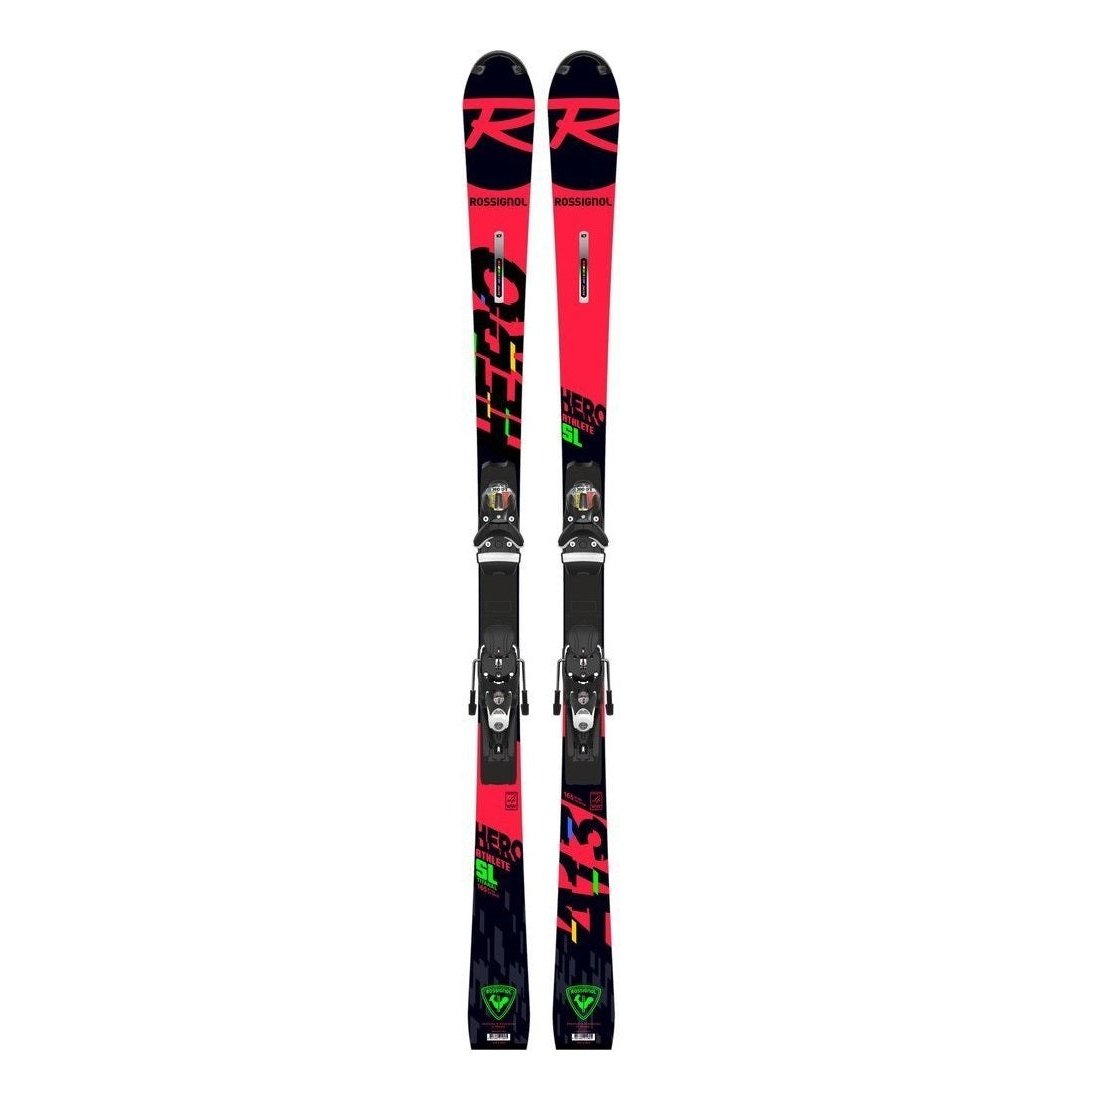 Skis Hero Athlete FIS SL 157 (SPX12)